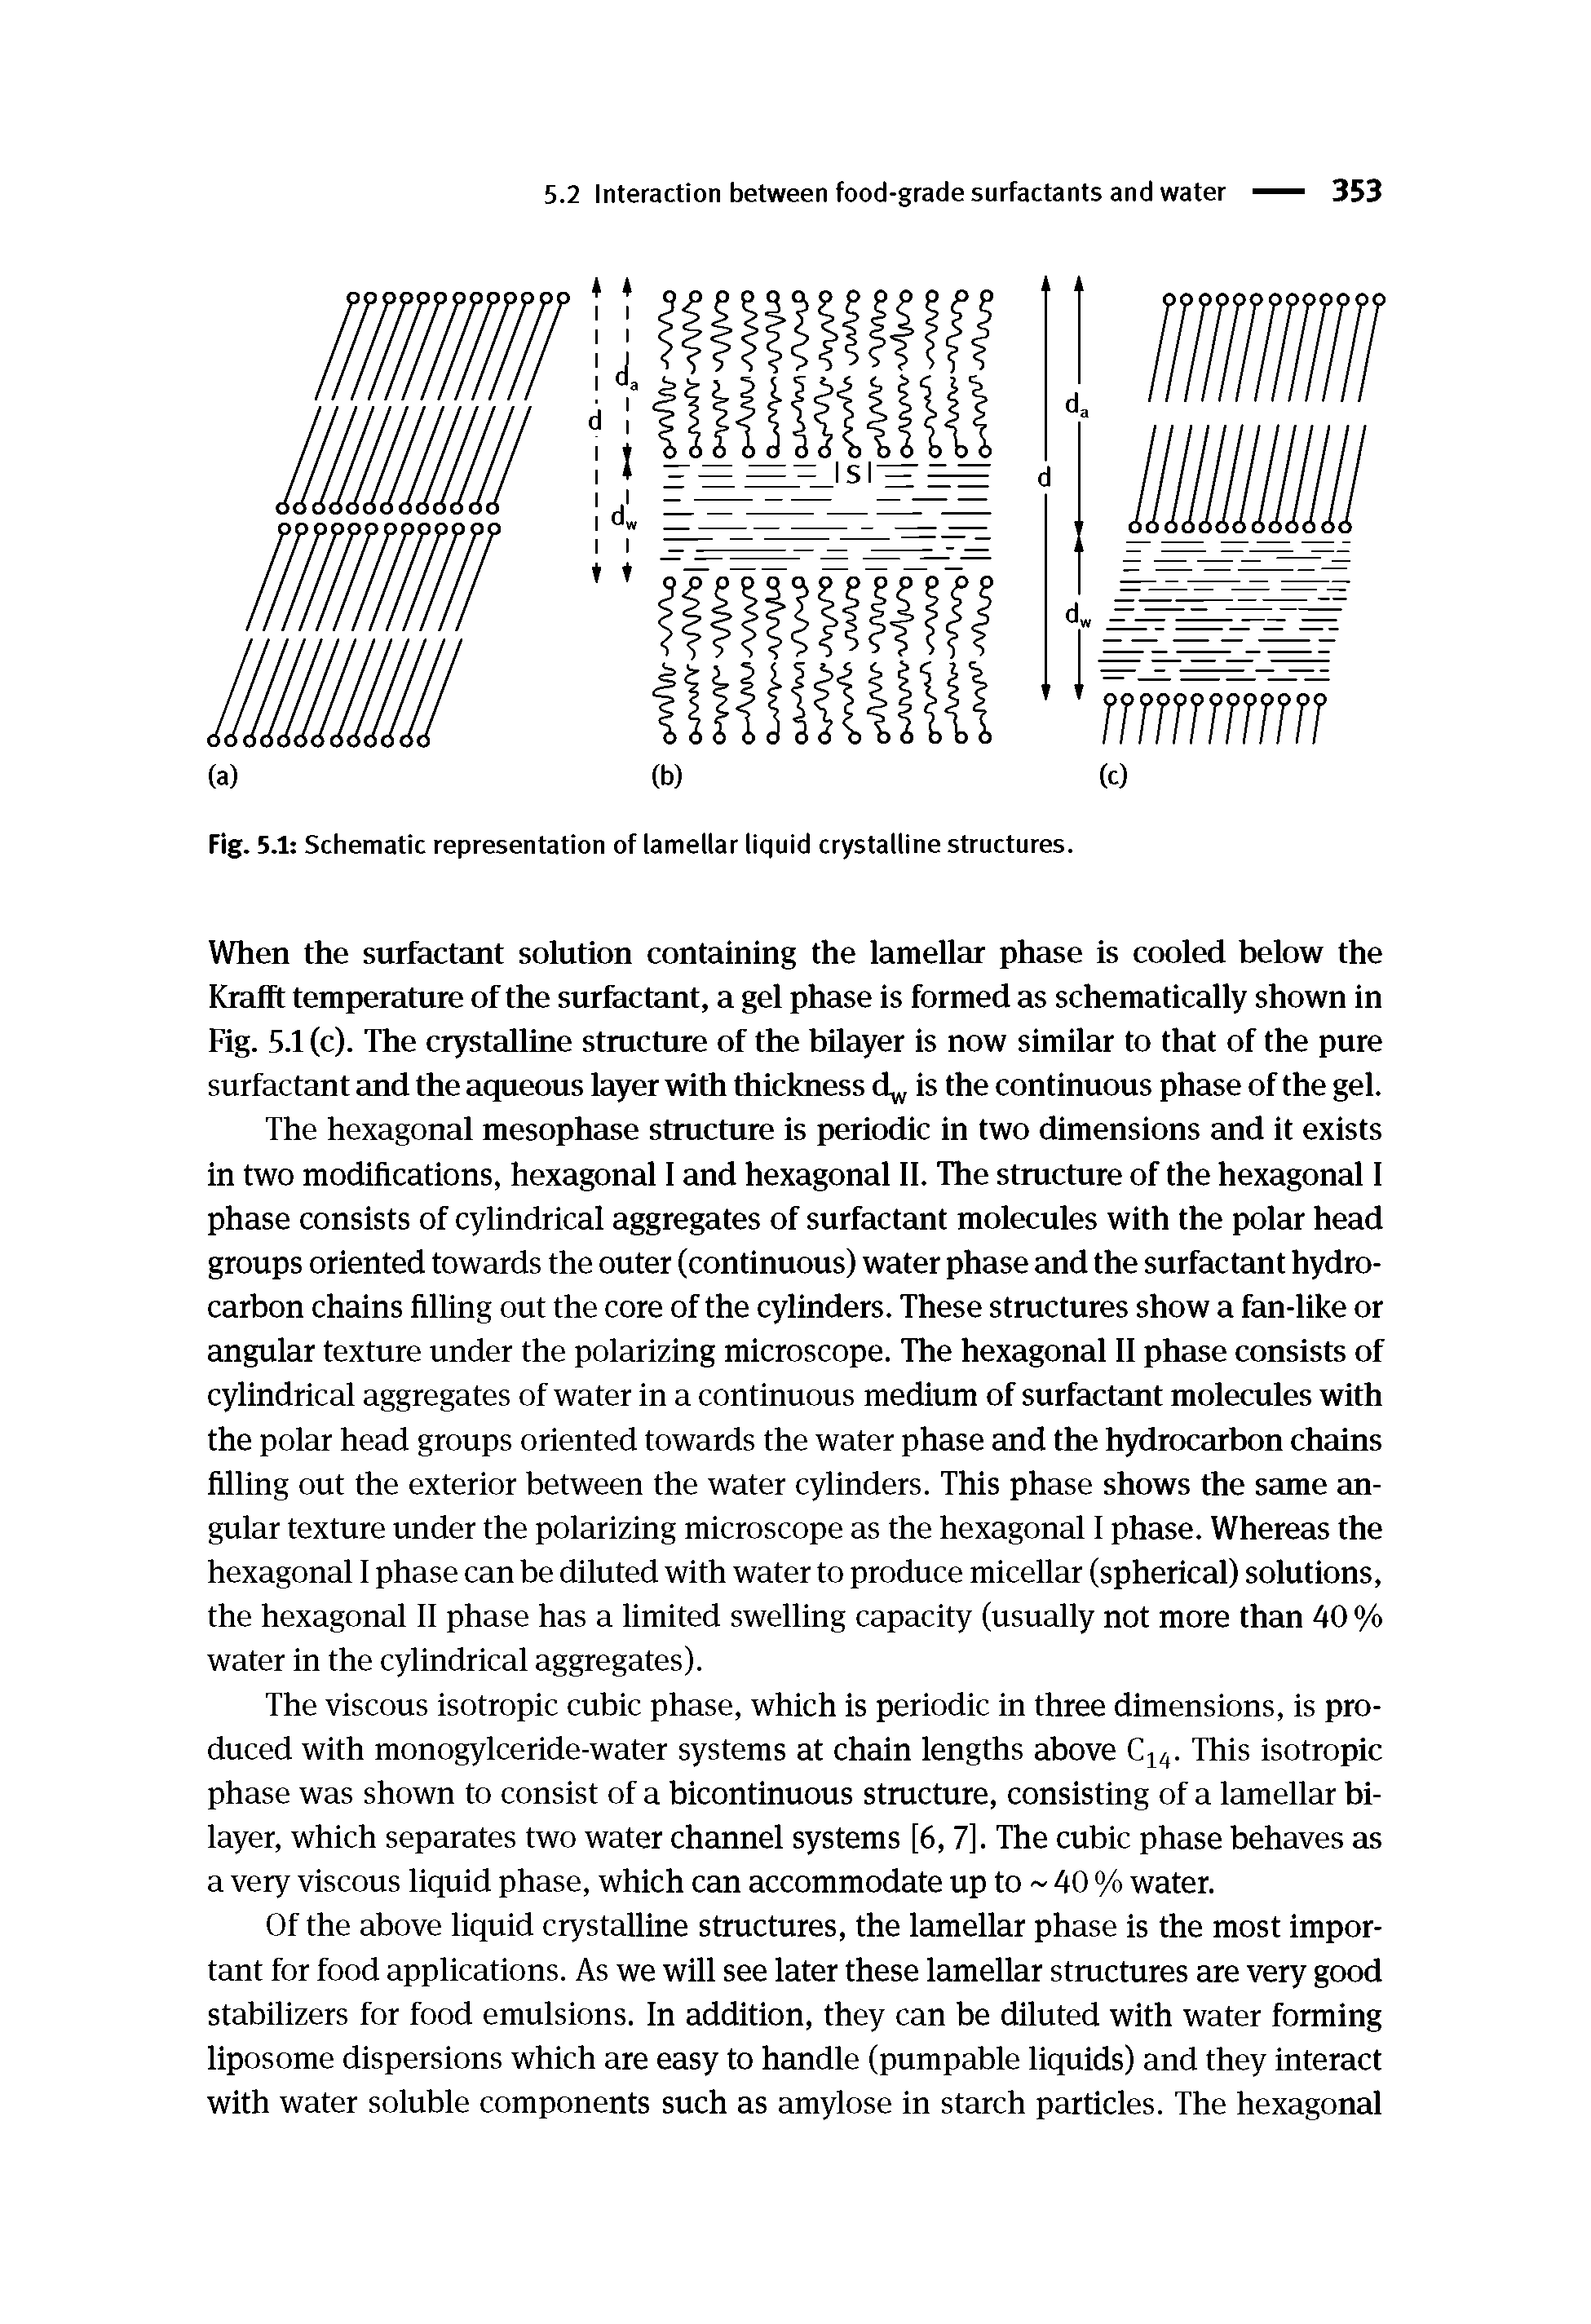 Fig. 5.1 Schematic representation of lamellar liquid crystalline structures.